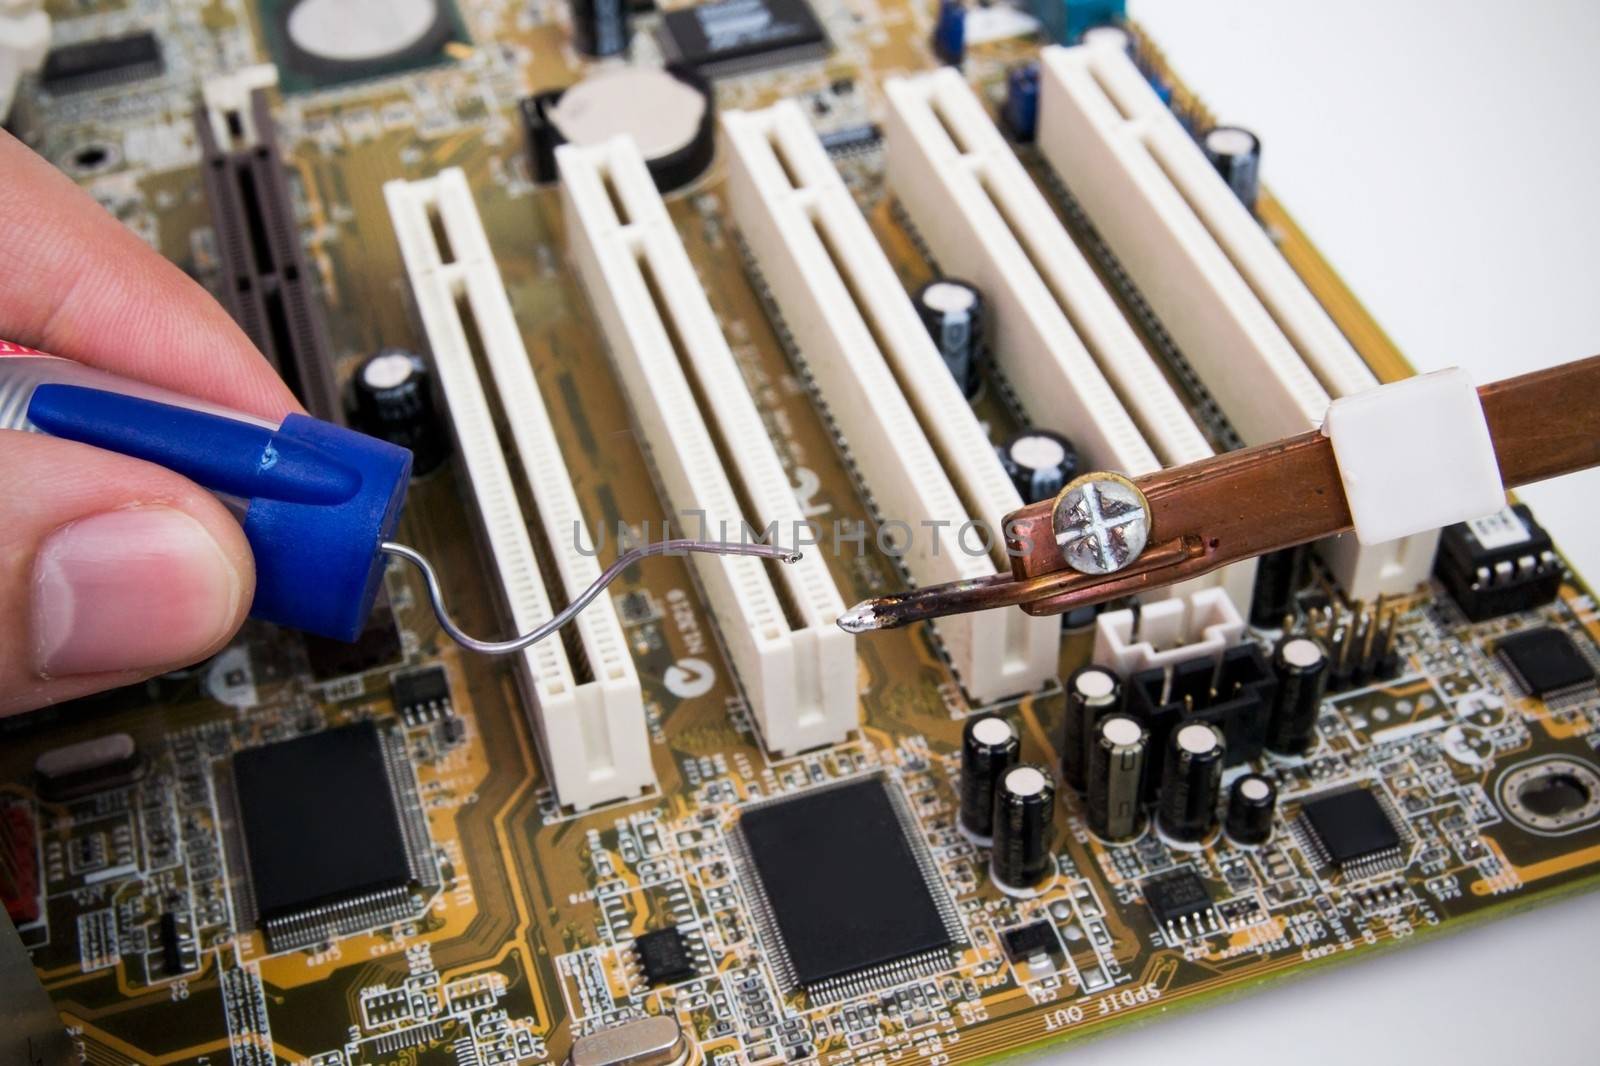 Repairing PC motherboard by simpson33